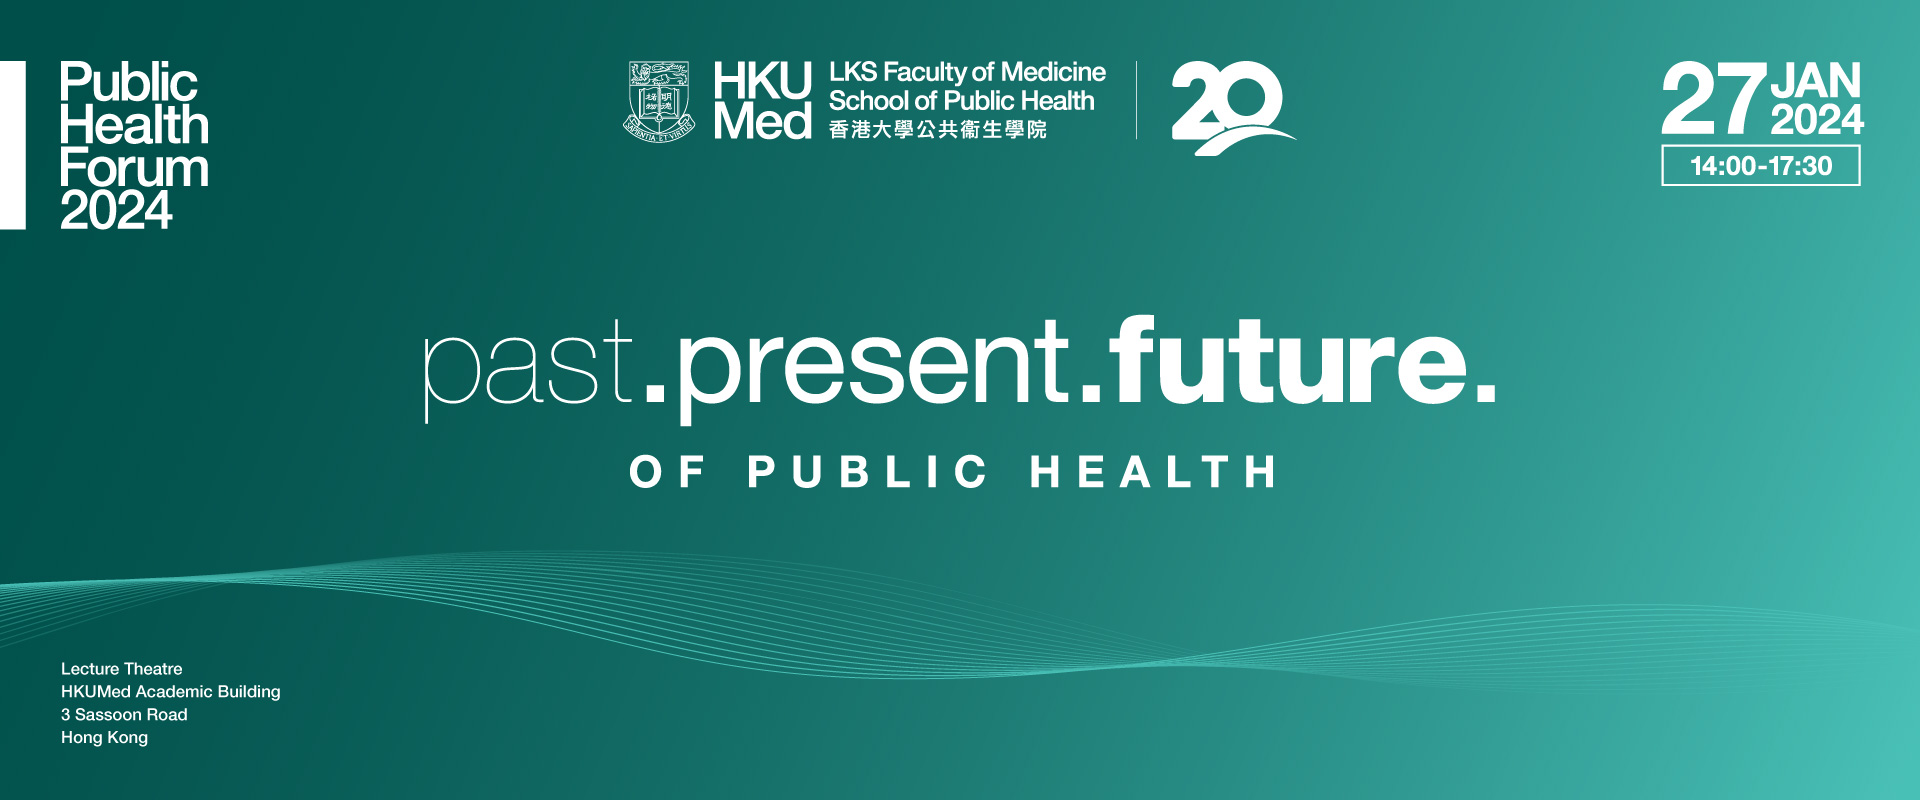 Public Health Forum 2024: Past, Present and Future of Public Health